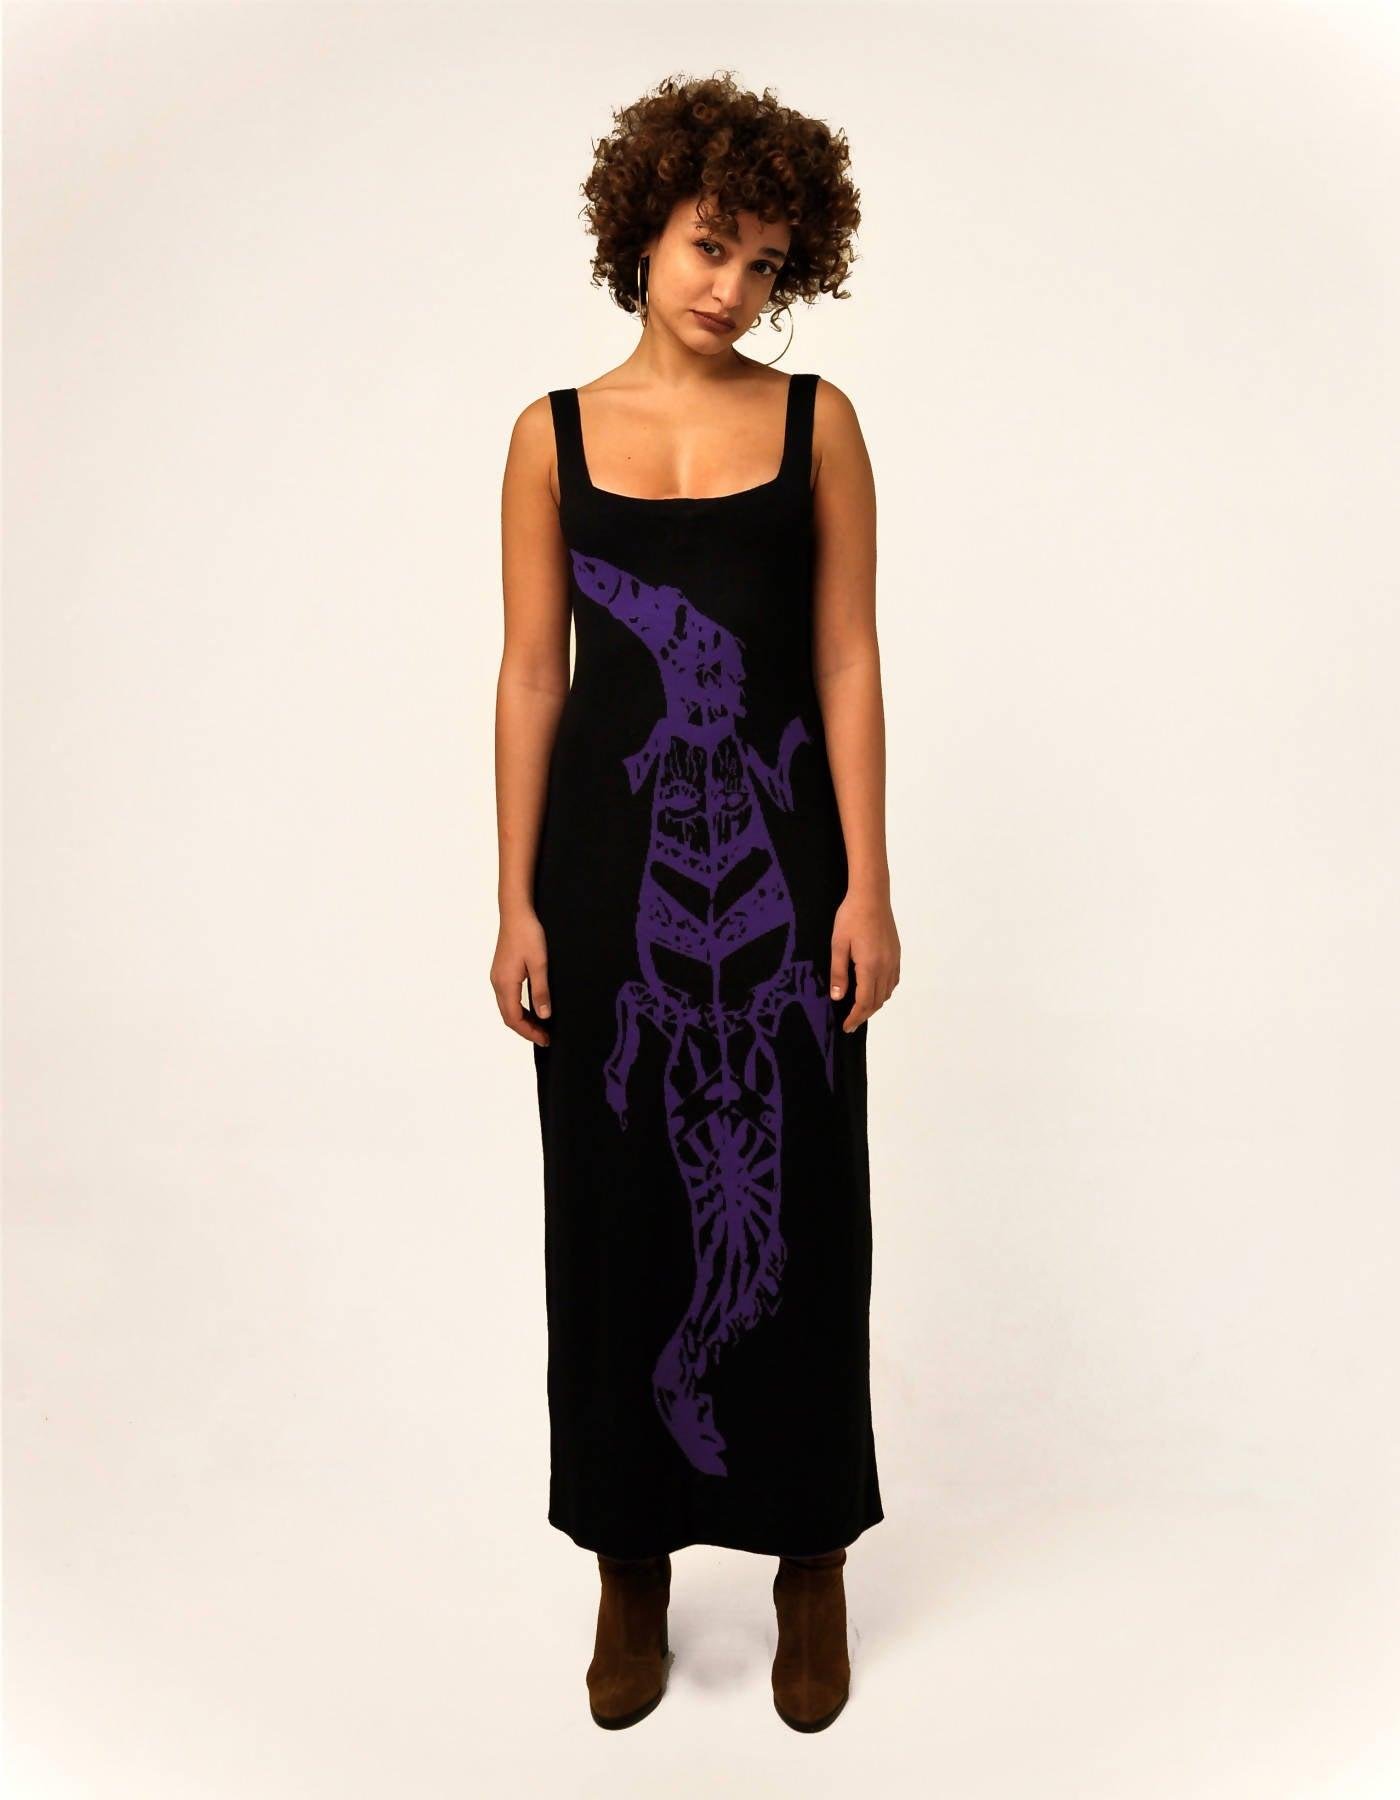 Crocado Knit Dress by TENERA